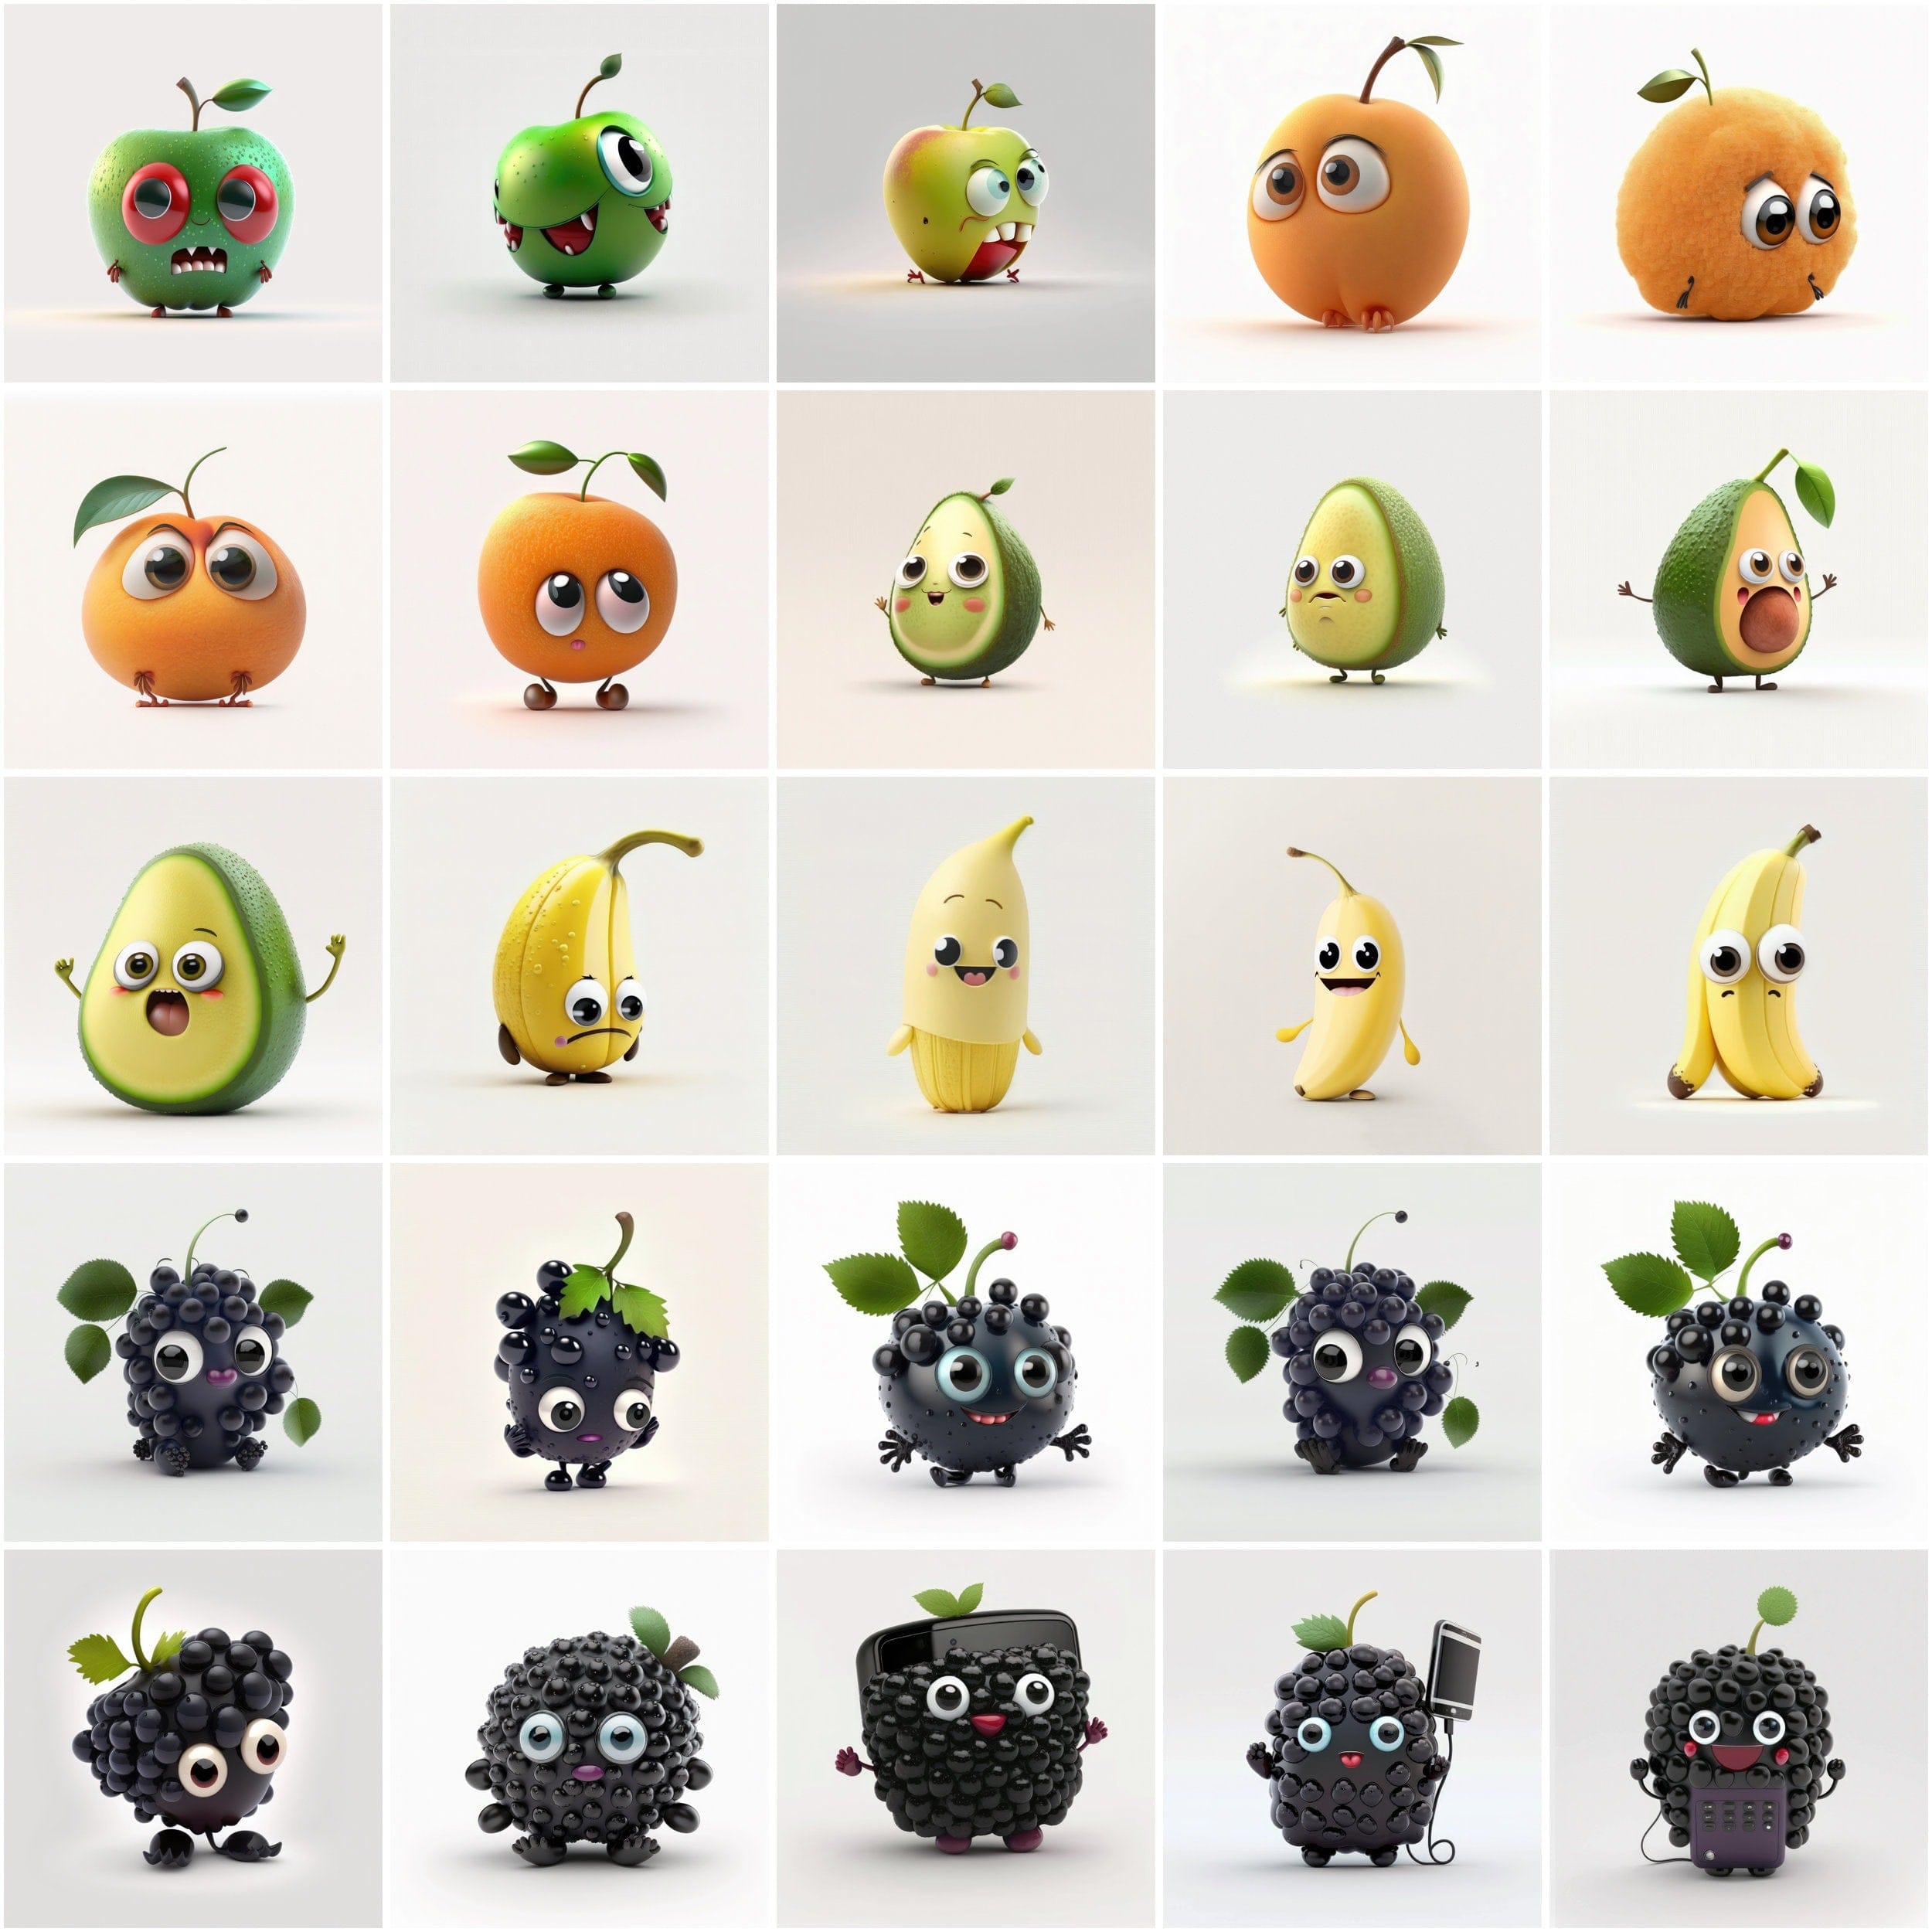 190 Funny Fruit Images Bundle, PNGs with Transparent Background for Social Media, Scrapbooking, Commercial License, Fruits No Background Digital Download Sumobundle